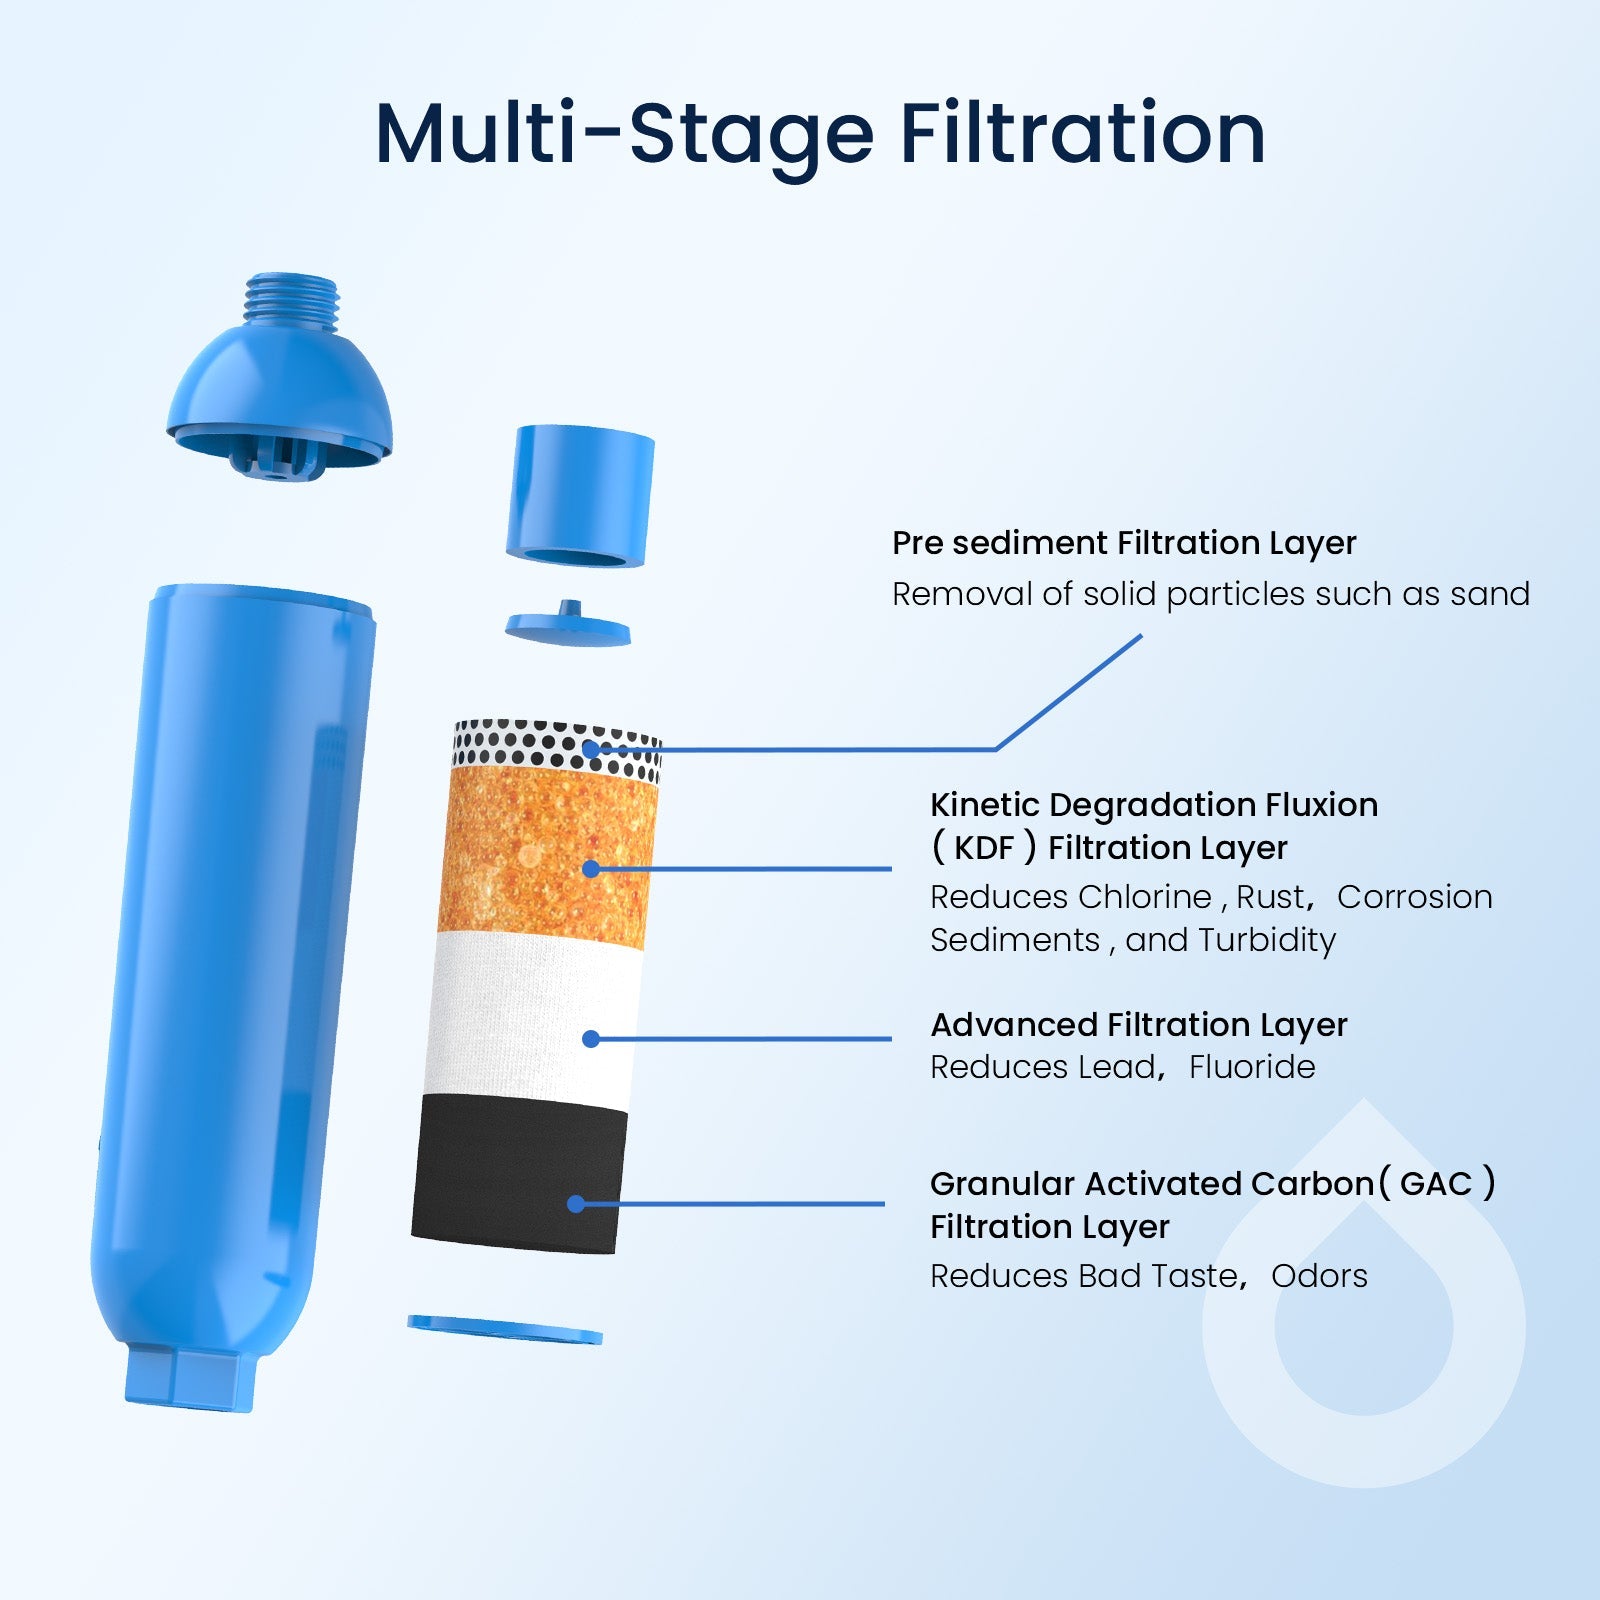 RV Inline Water Filter w/Flexible Hose Protector,Reduces Chlorine,Bad Taste